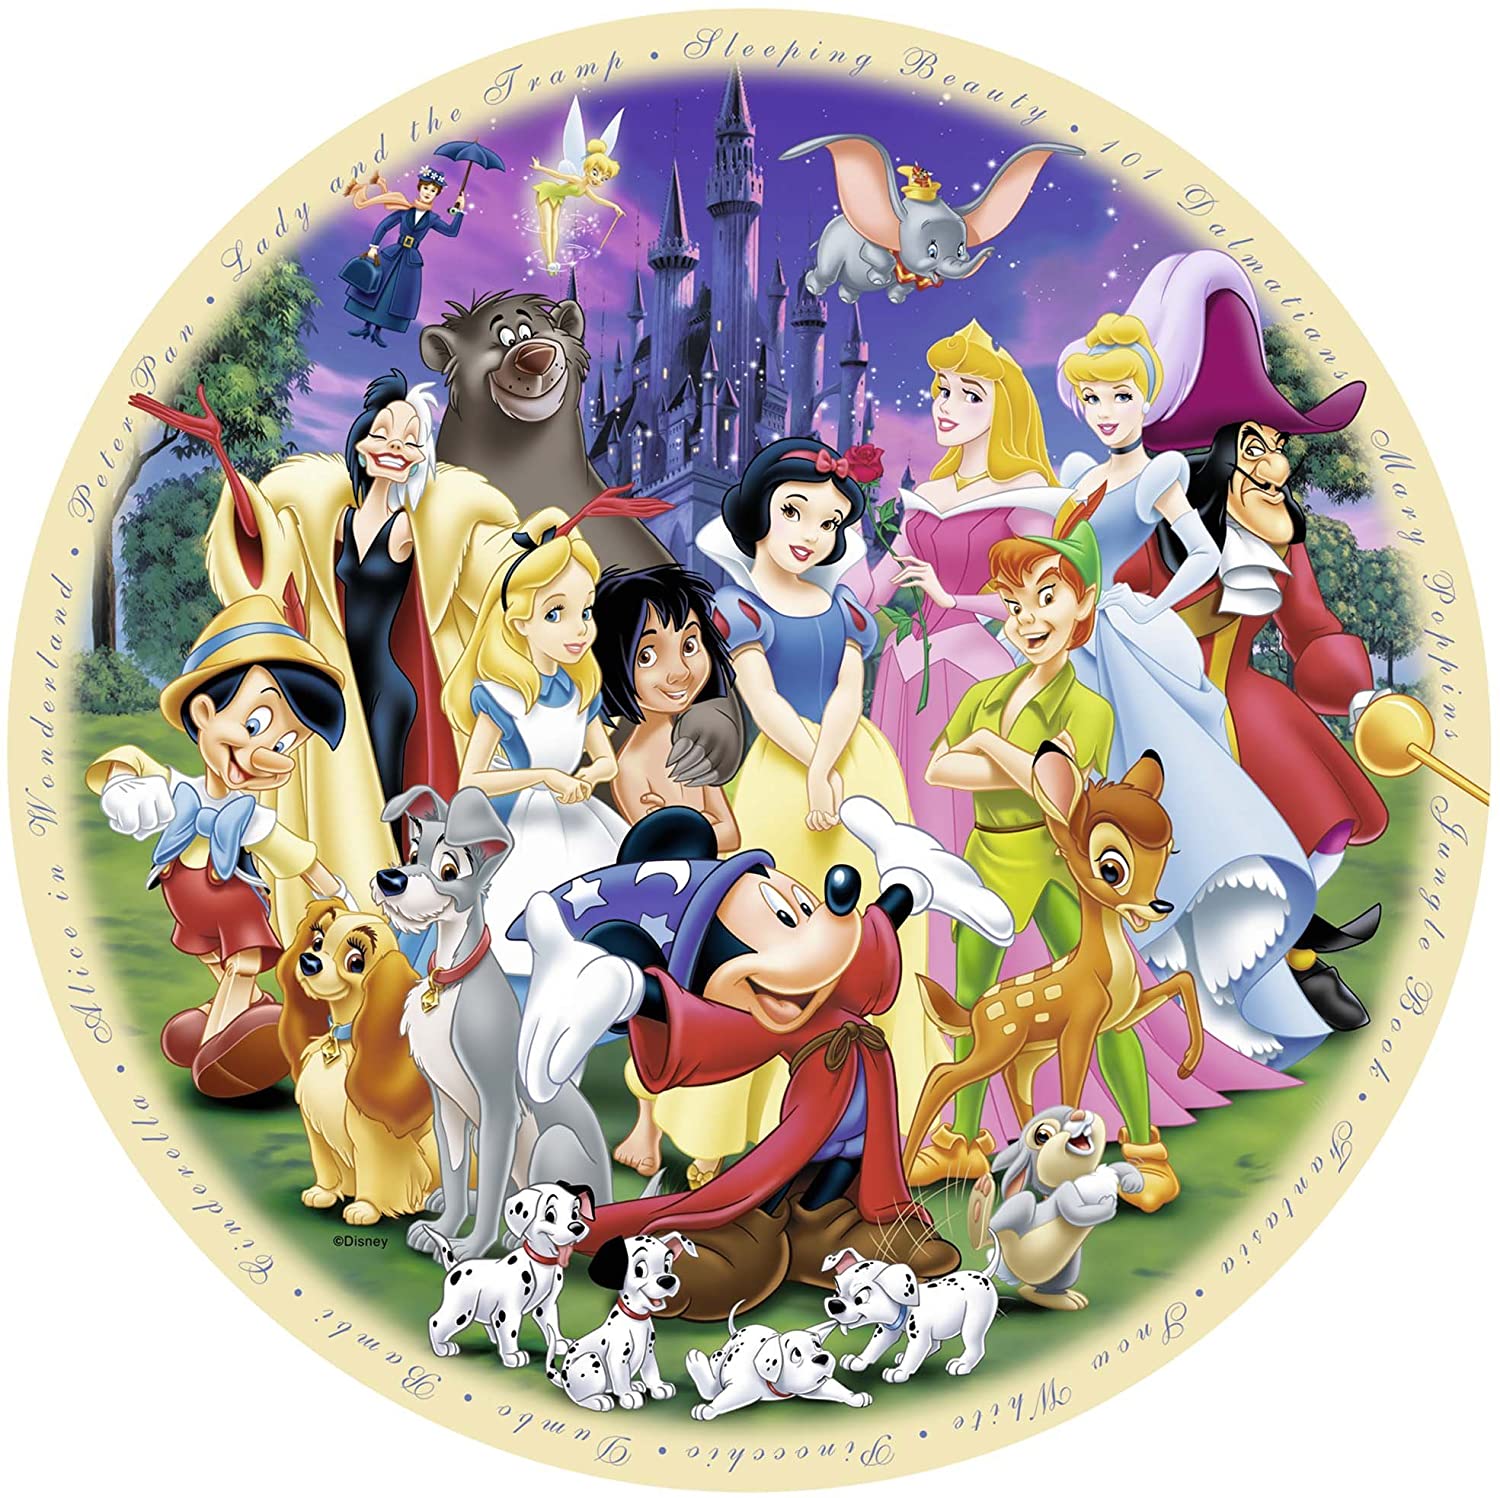 Ravensburger World of Disney 1000 Piece Puzzle – The Puzzle